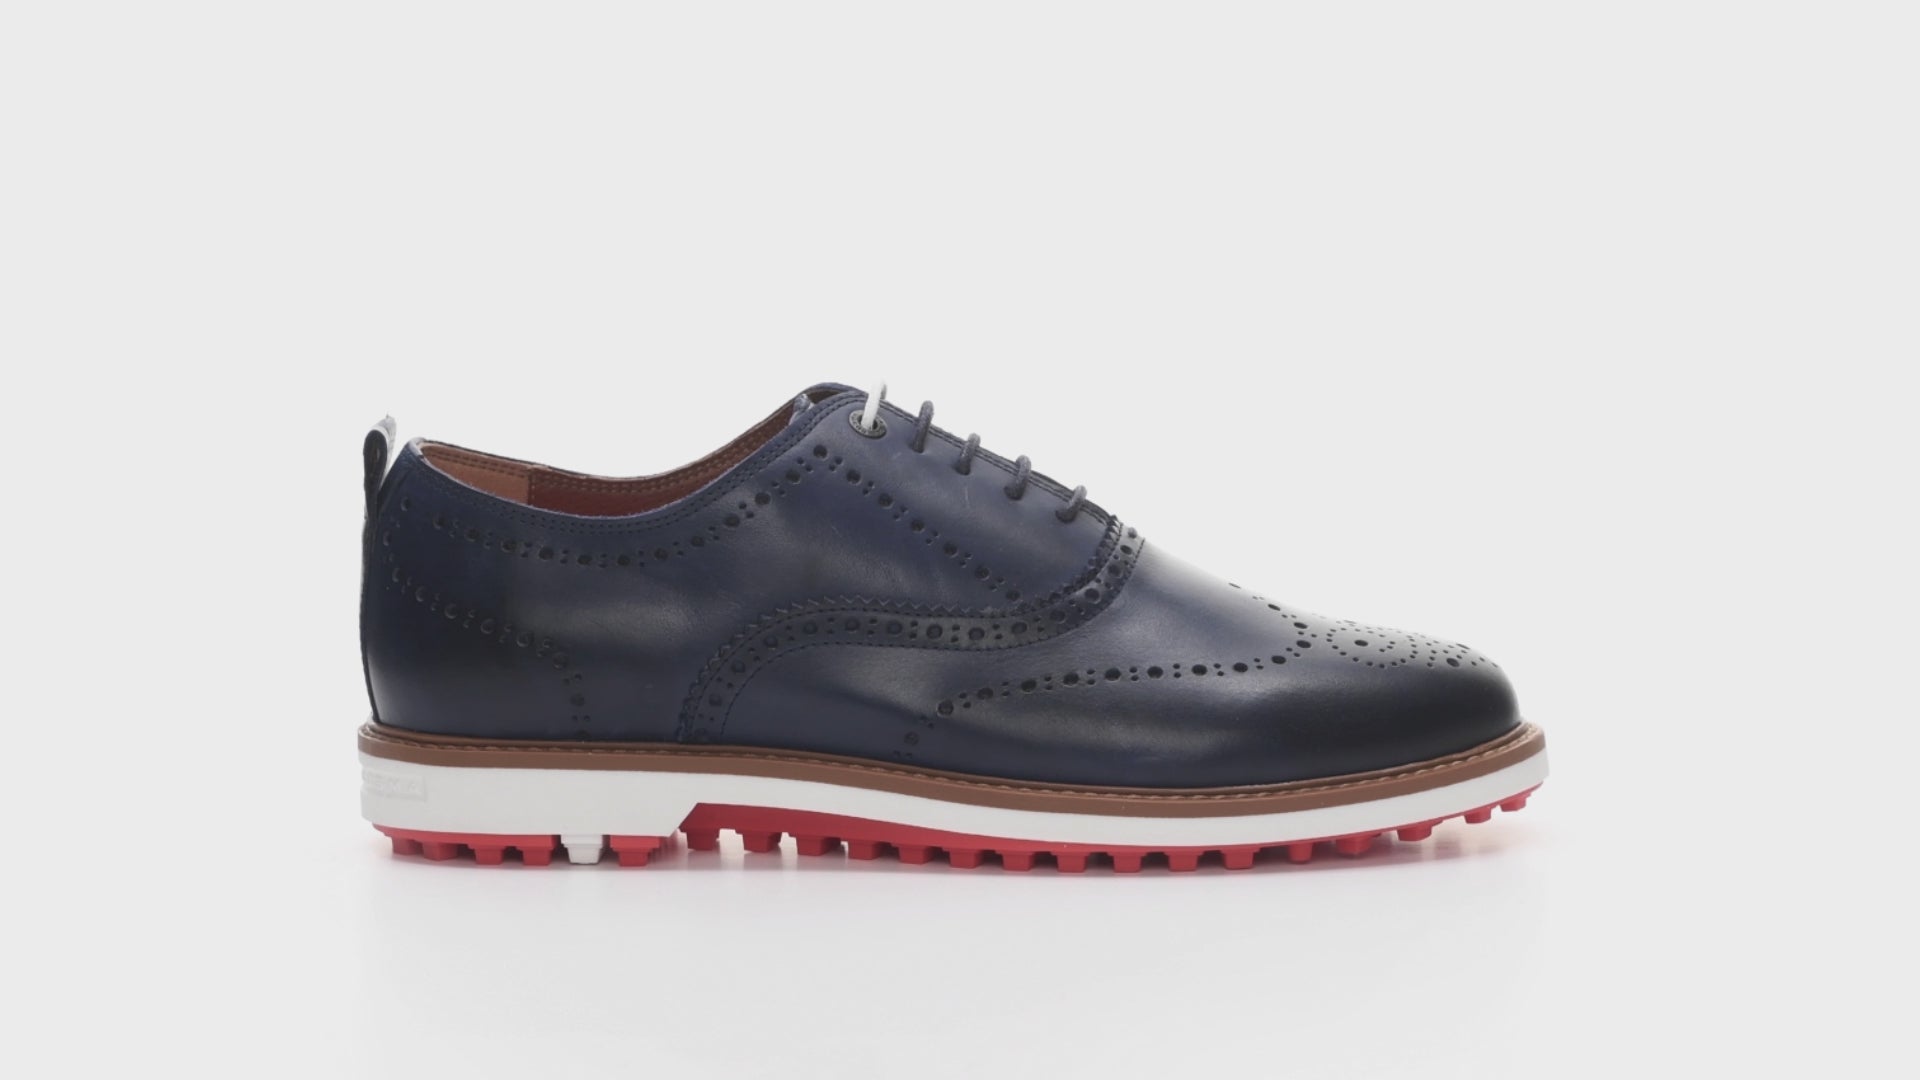 Churchill blue classic men's golf shoe from duca del cosma